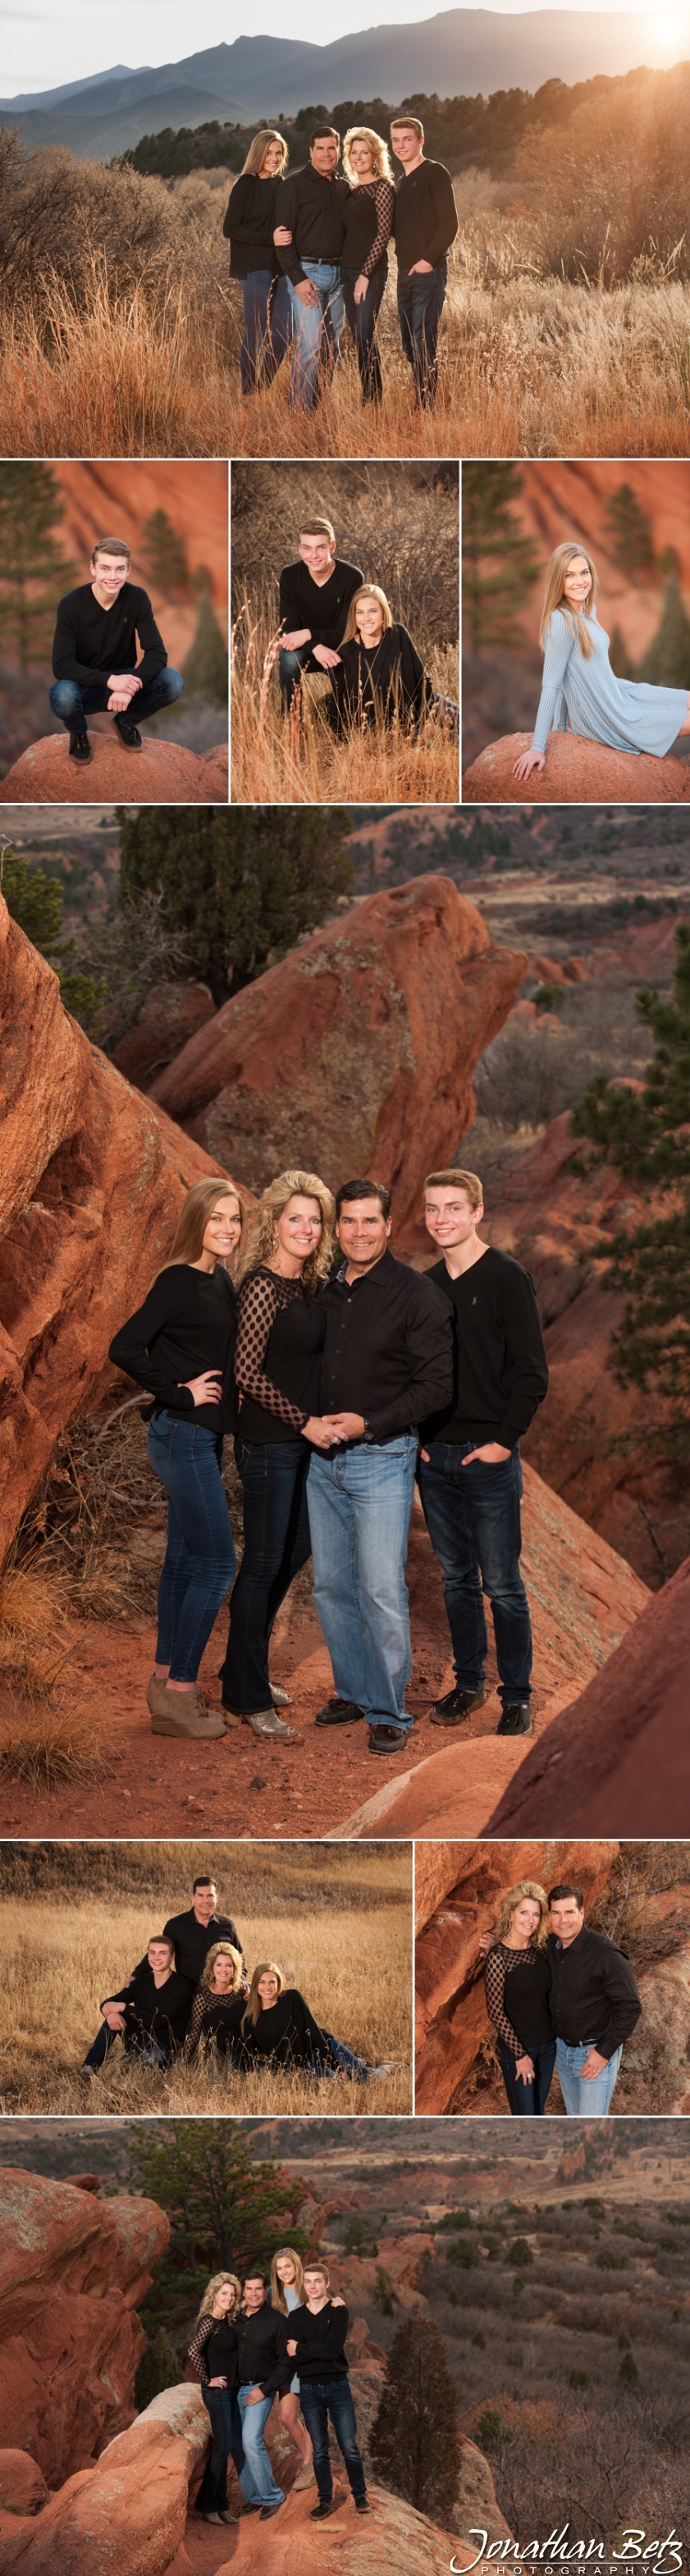 Colorado Springs Family Photographer Outdoor Family Pictures Jonathan Betz Photography 1